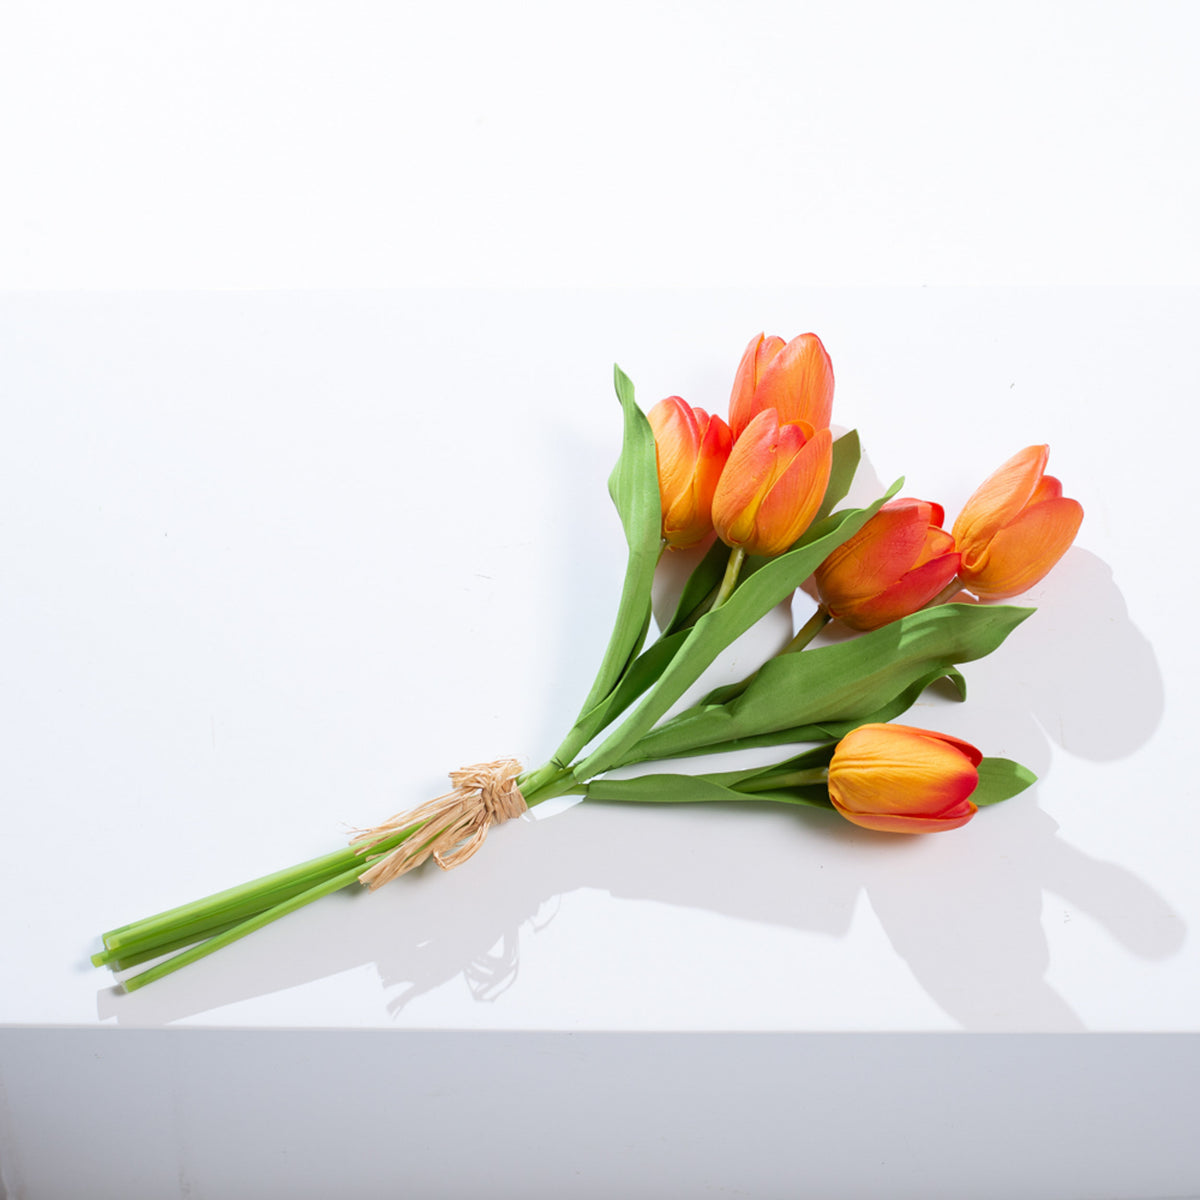 orange tulips bouquet